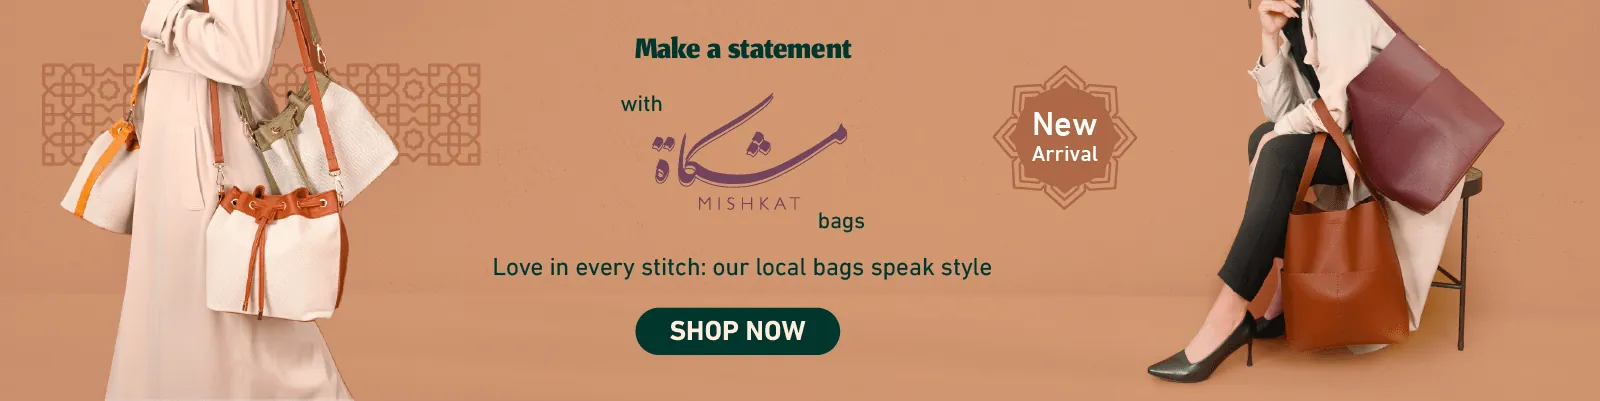 Mishkat Bags Webnew-media